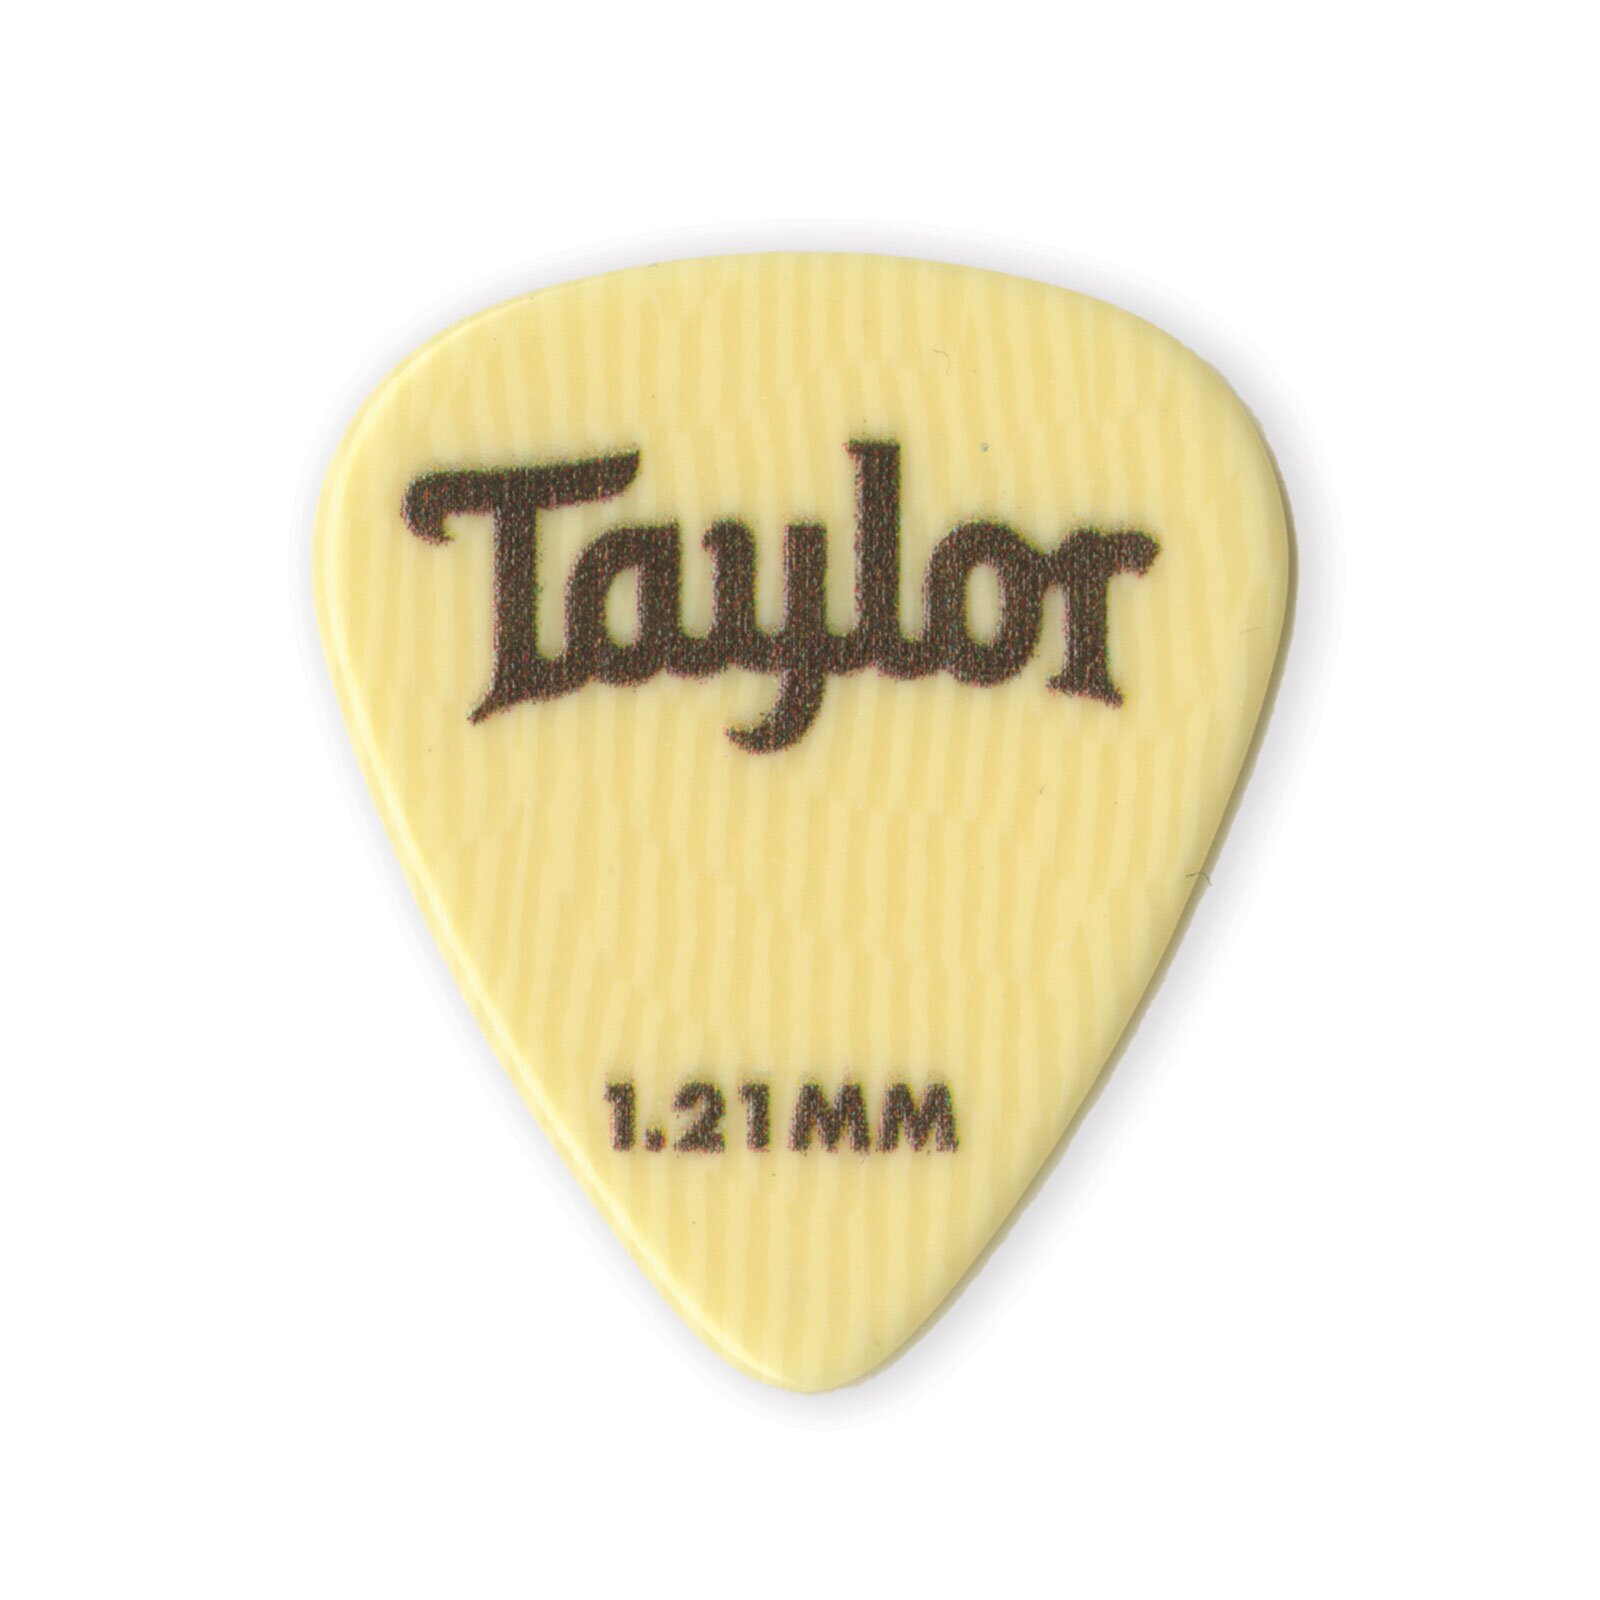 Taylor Premium DarkTone Ivoroid Guitar Picks 1.21, 6-Pack : photo 1